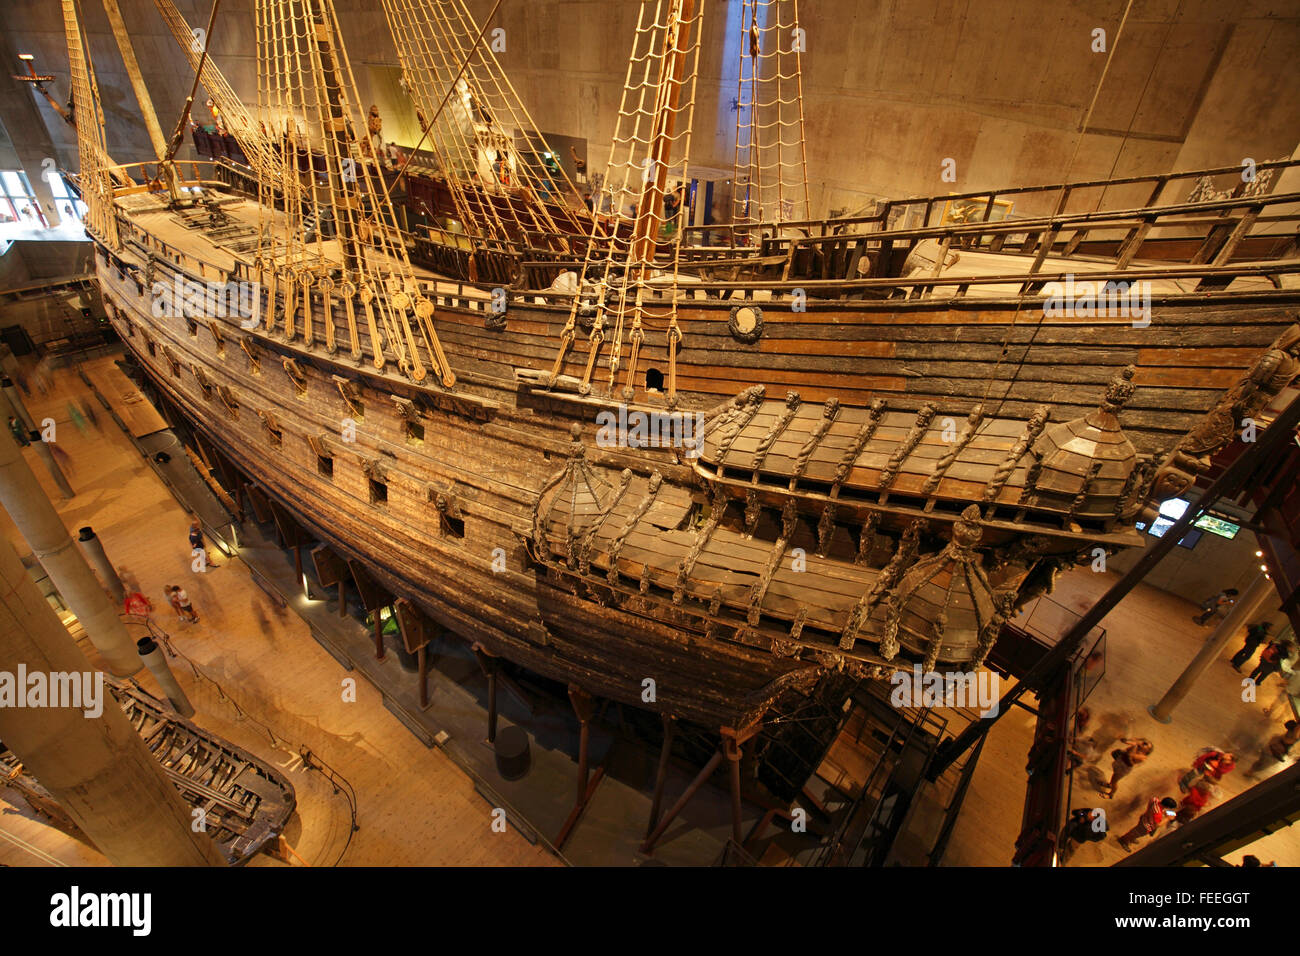 Vasa (ship) Museum in Stockholm, Sweden Stock Photo: 94977368 - Alamy